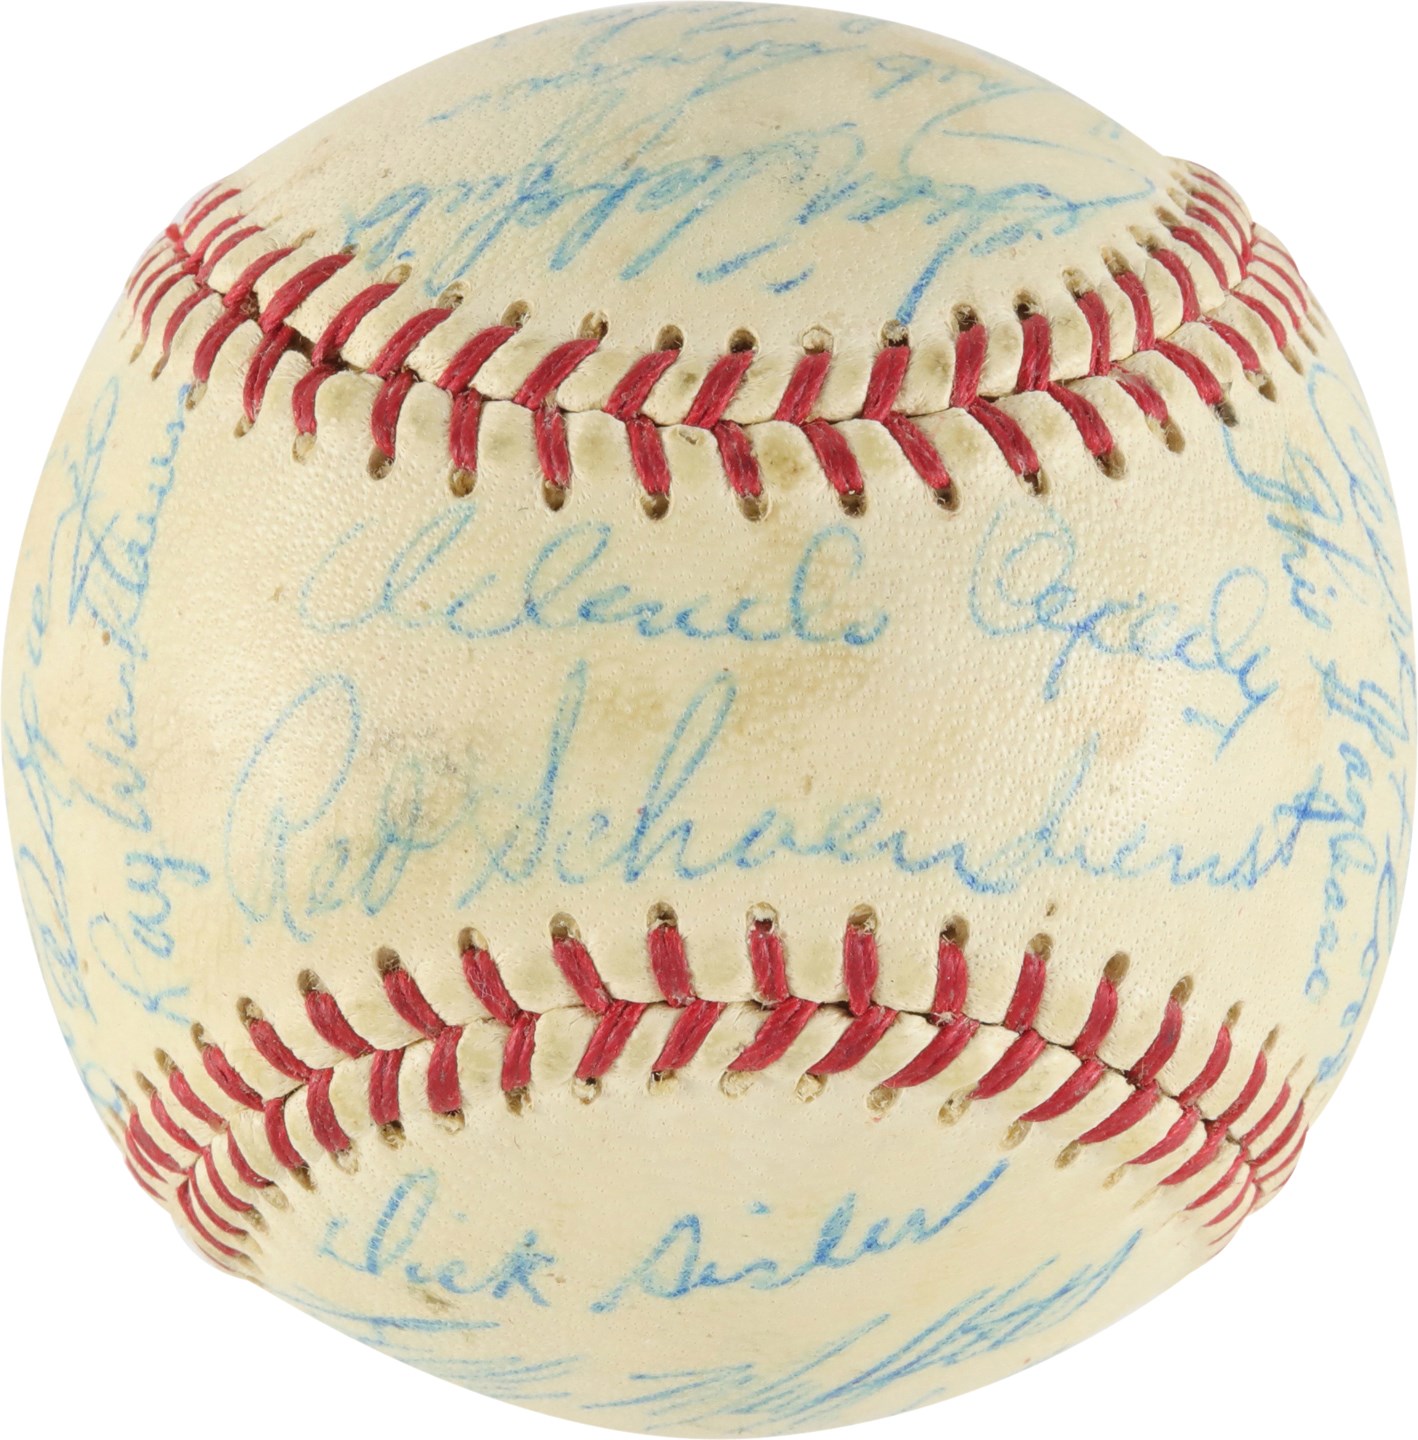 1968 St. Louis Cardinals National League Champion Team-Signed Baseball (JSA)